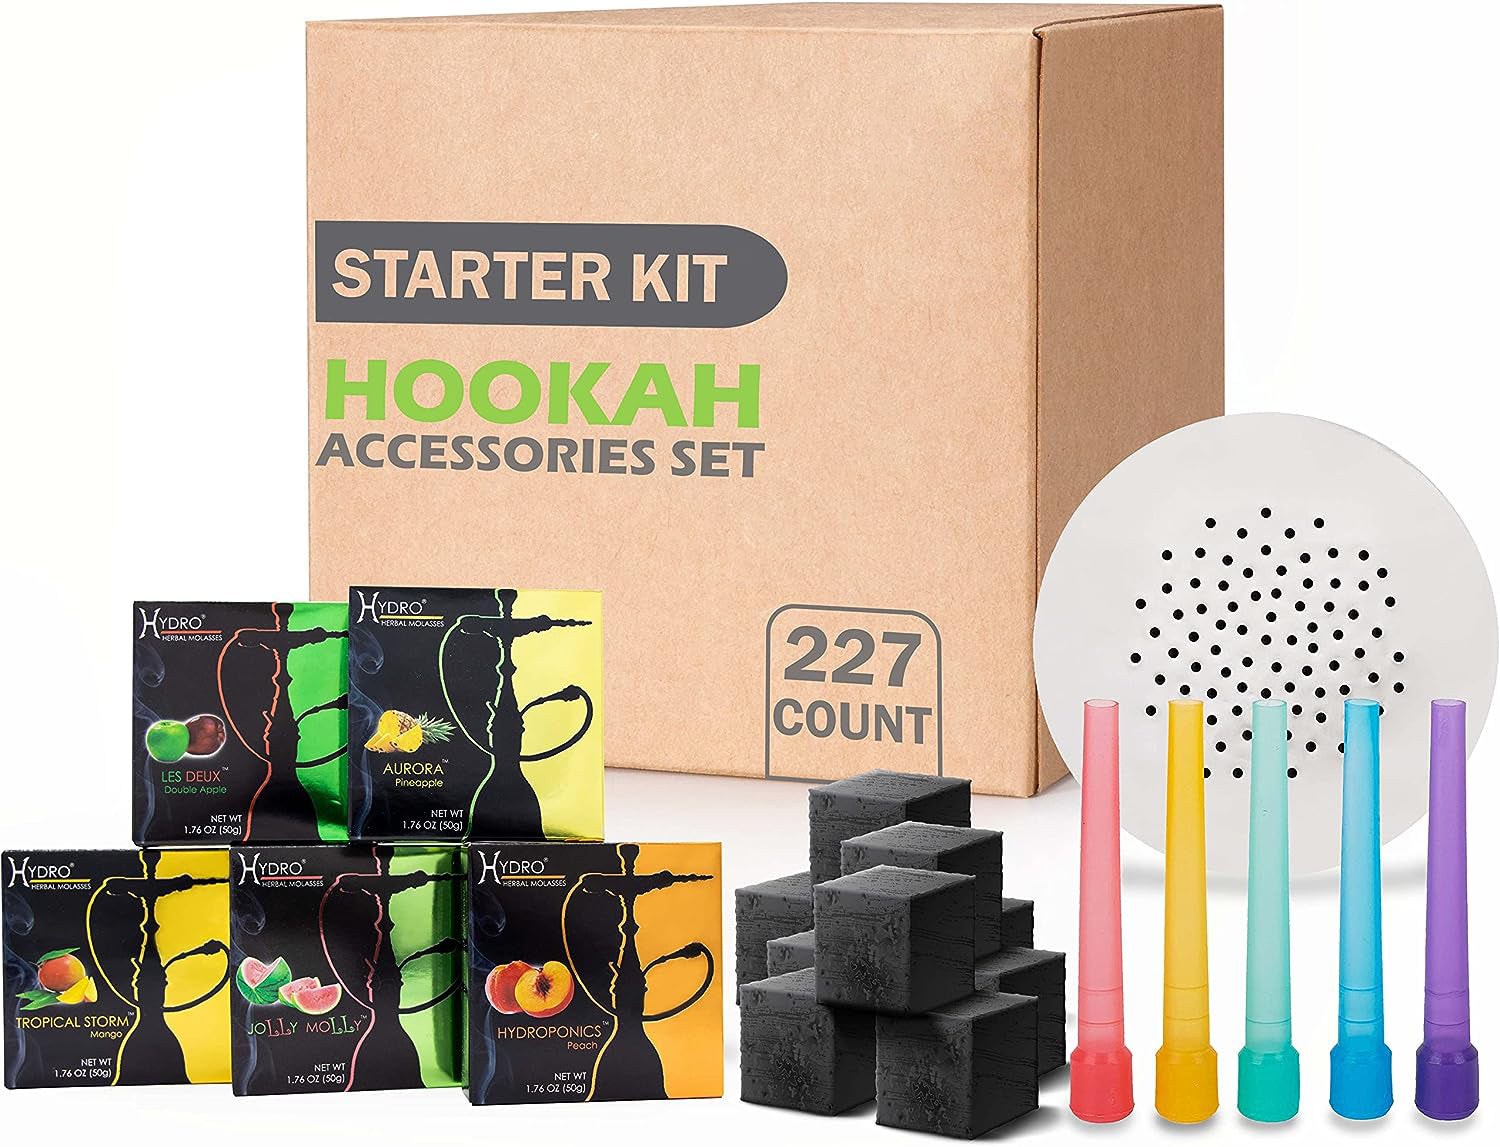 Hookah Accessories Set: 72 Charcoal, 50 Disposable Mouth Tips, 5 Hydro  Flavor Assortments, 100 Pre-Punched Aluminum Foils